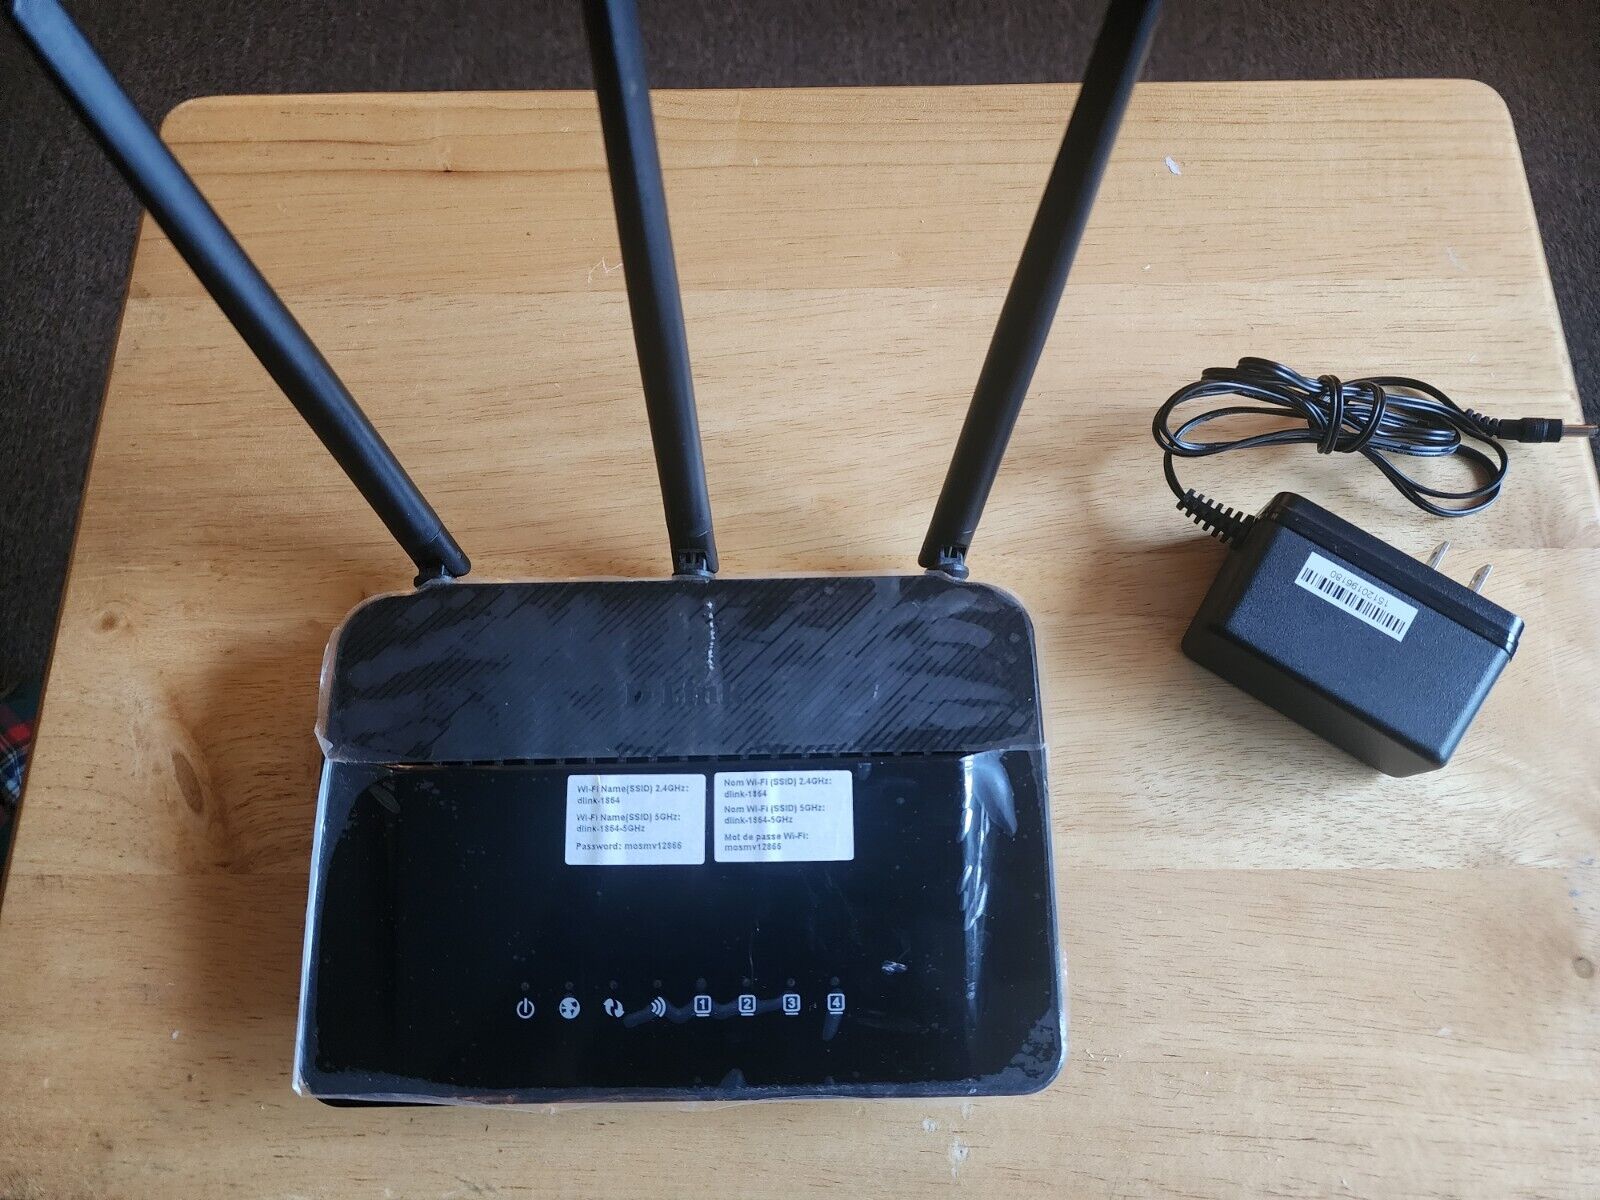 D-Link DIR-859 Wireless AC1750 High Power Dual-Band WIFI Gigabit Router TESTED